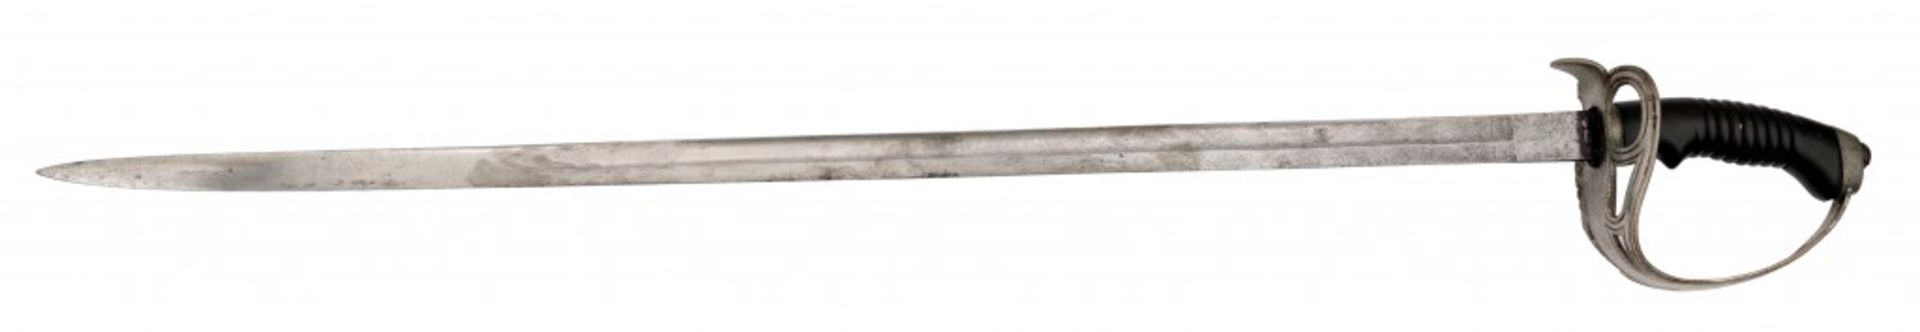 A Sword M1889 - Image 3 of 3